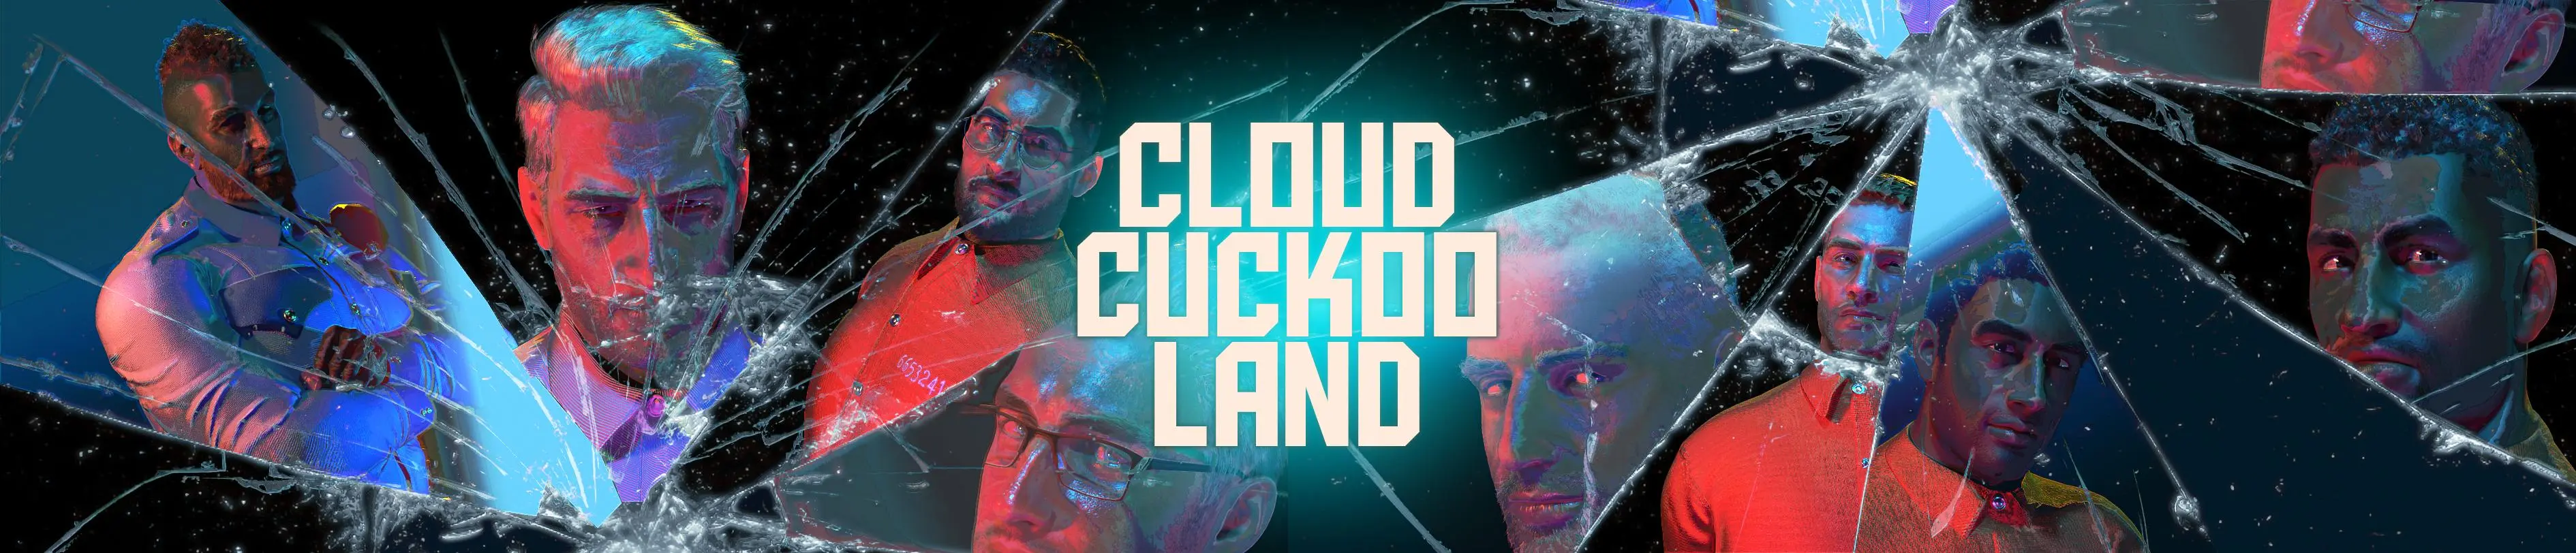 Cloud Cuckoo Land main image